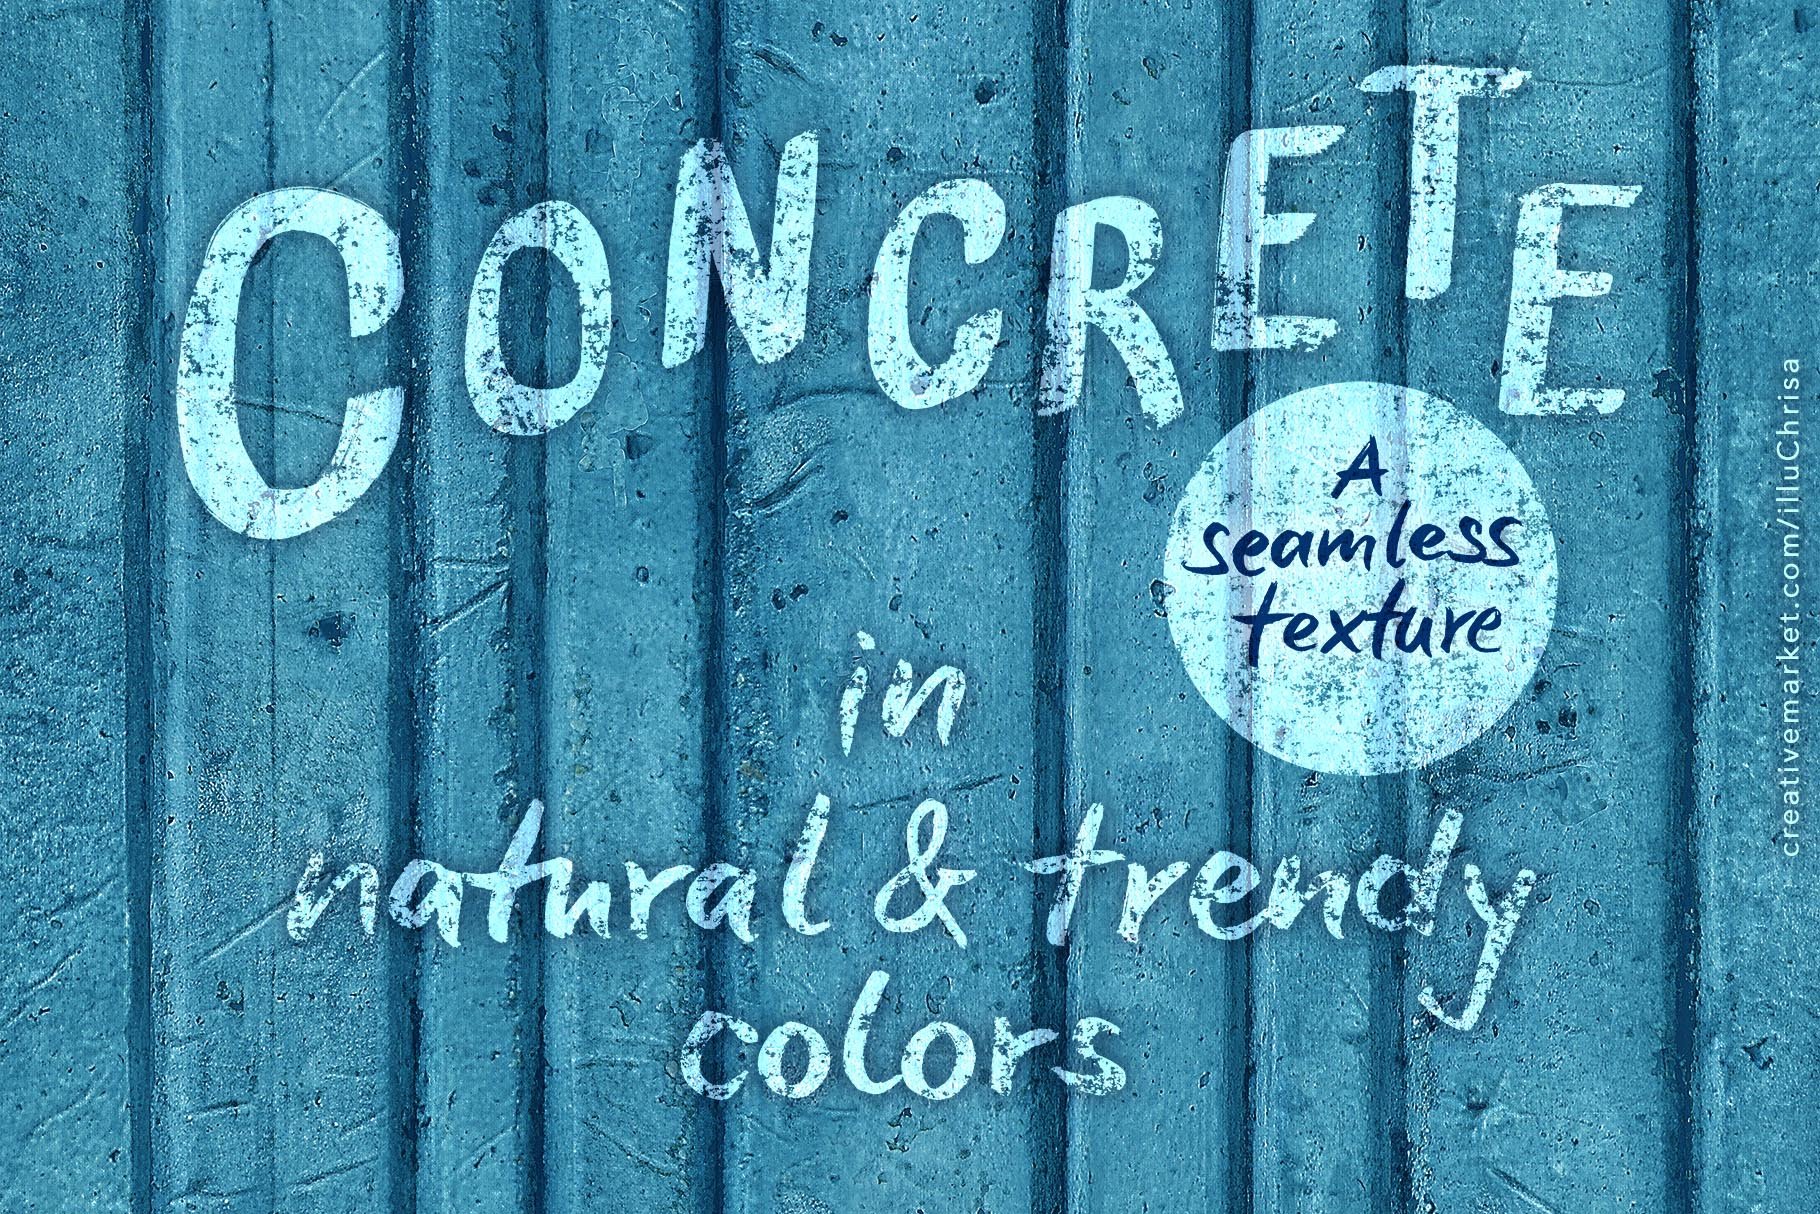 Concrete – a seamless texture cover image.